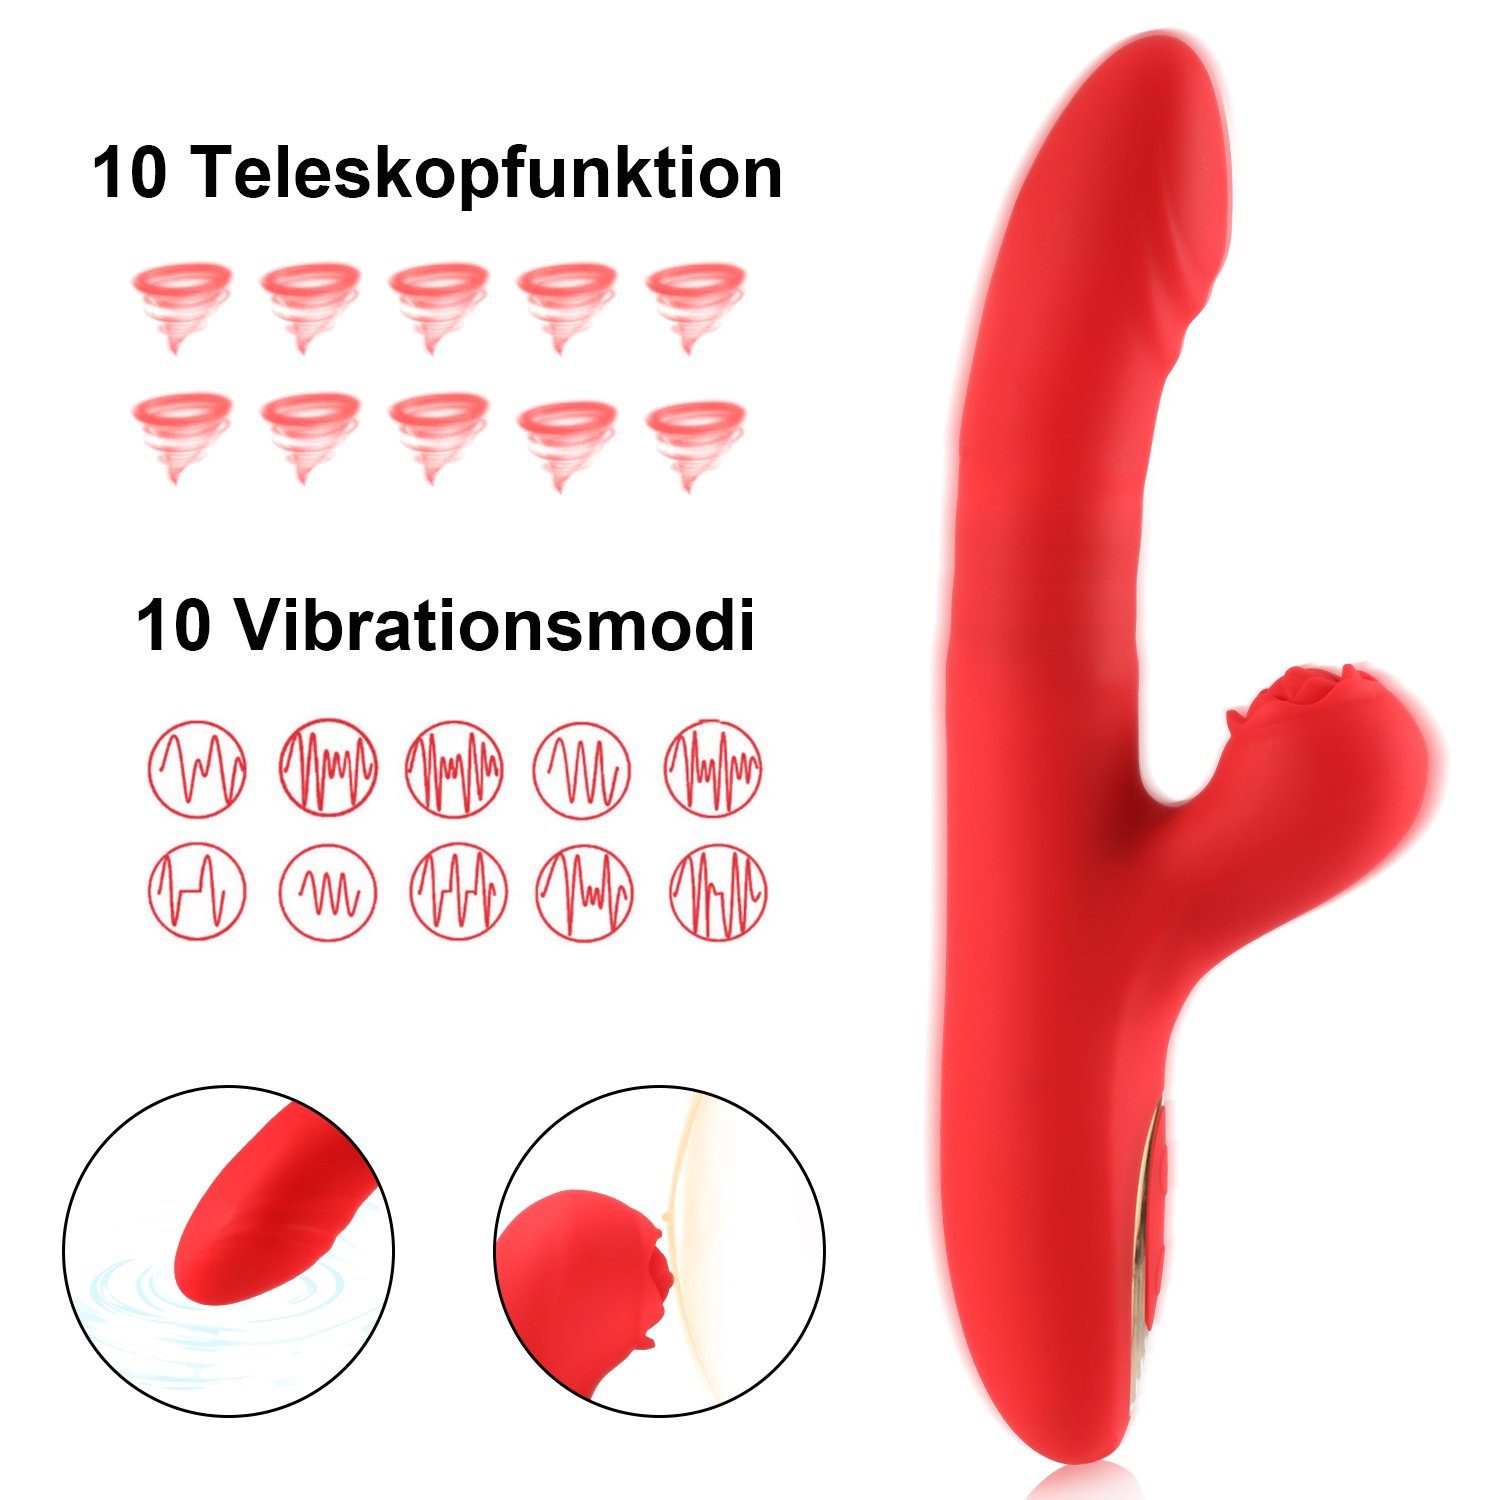 LETGOSPT Analvibratoren Spielzeug 10 für Vibrator G-Punkt-Vibratoren, + Vibrationsmodi 10 mit Frauen Teleskopmodi, die Sex